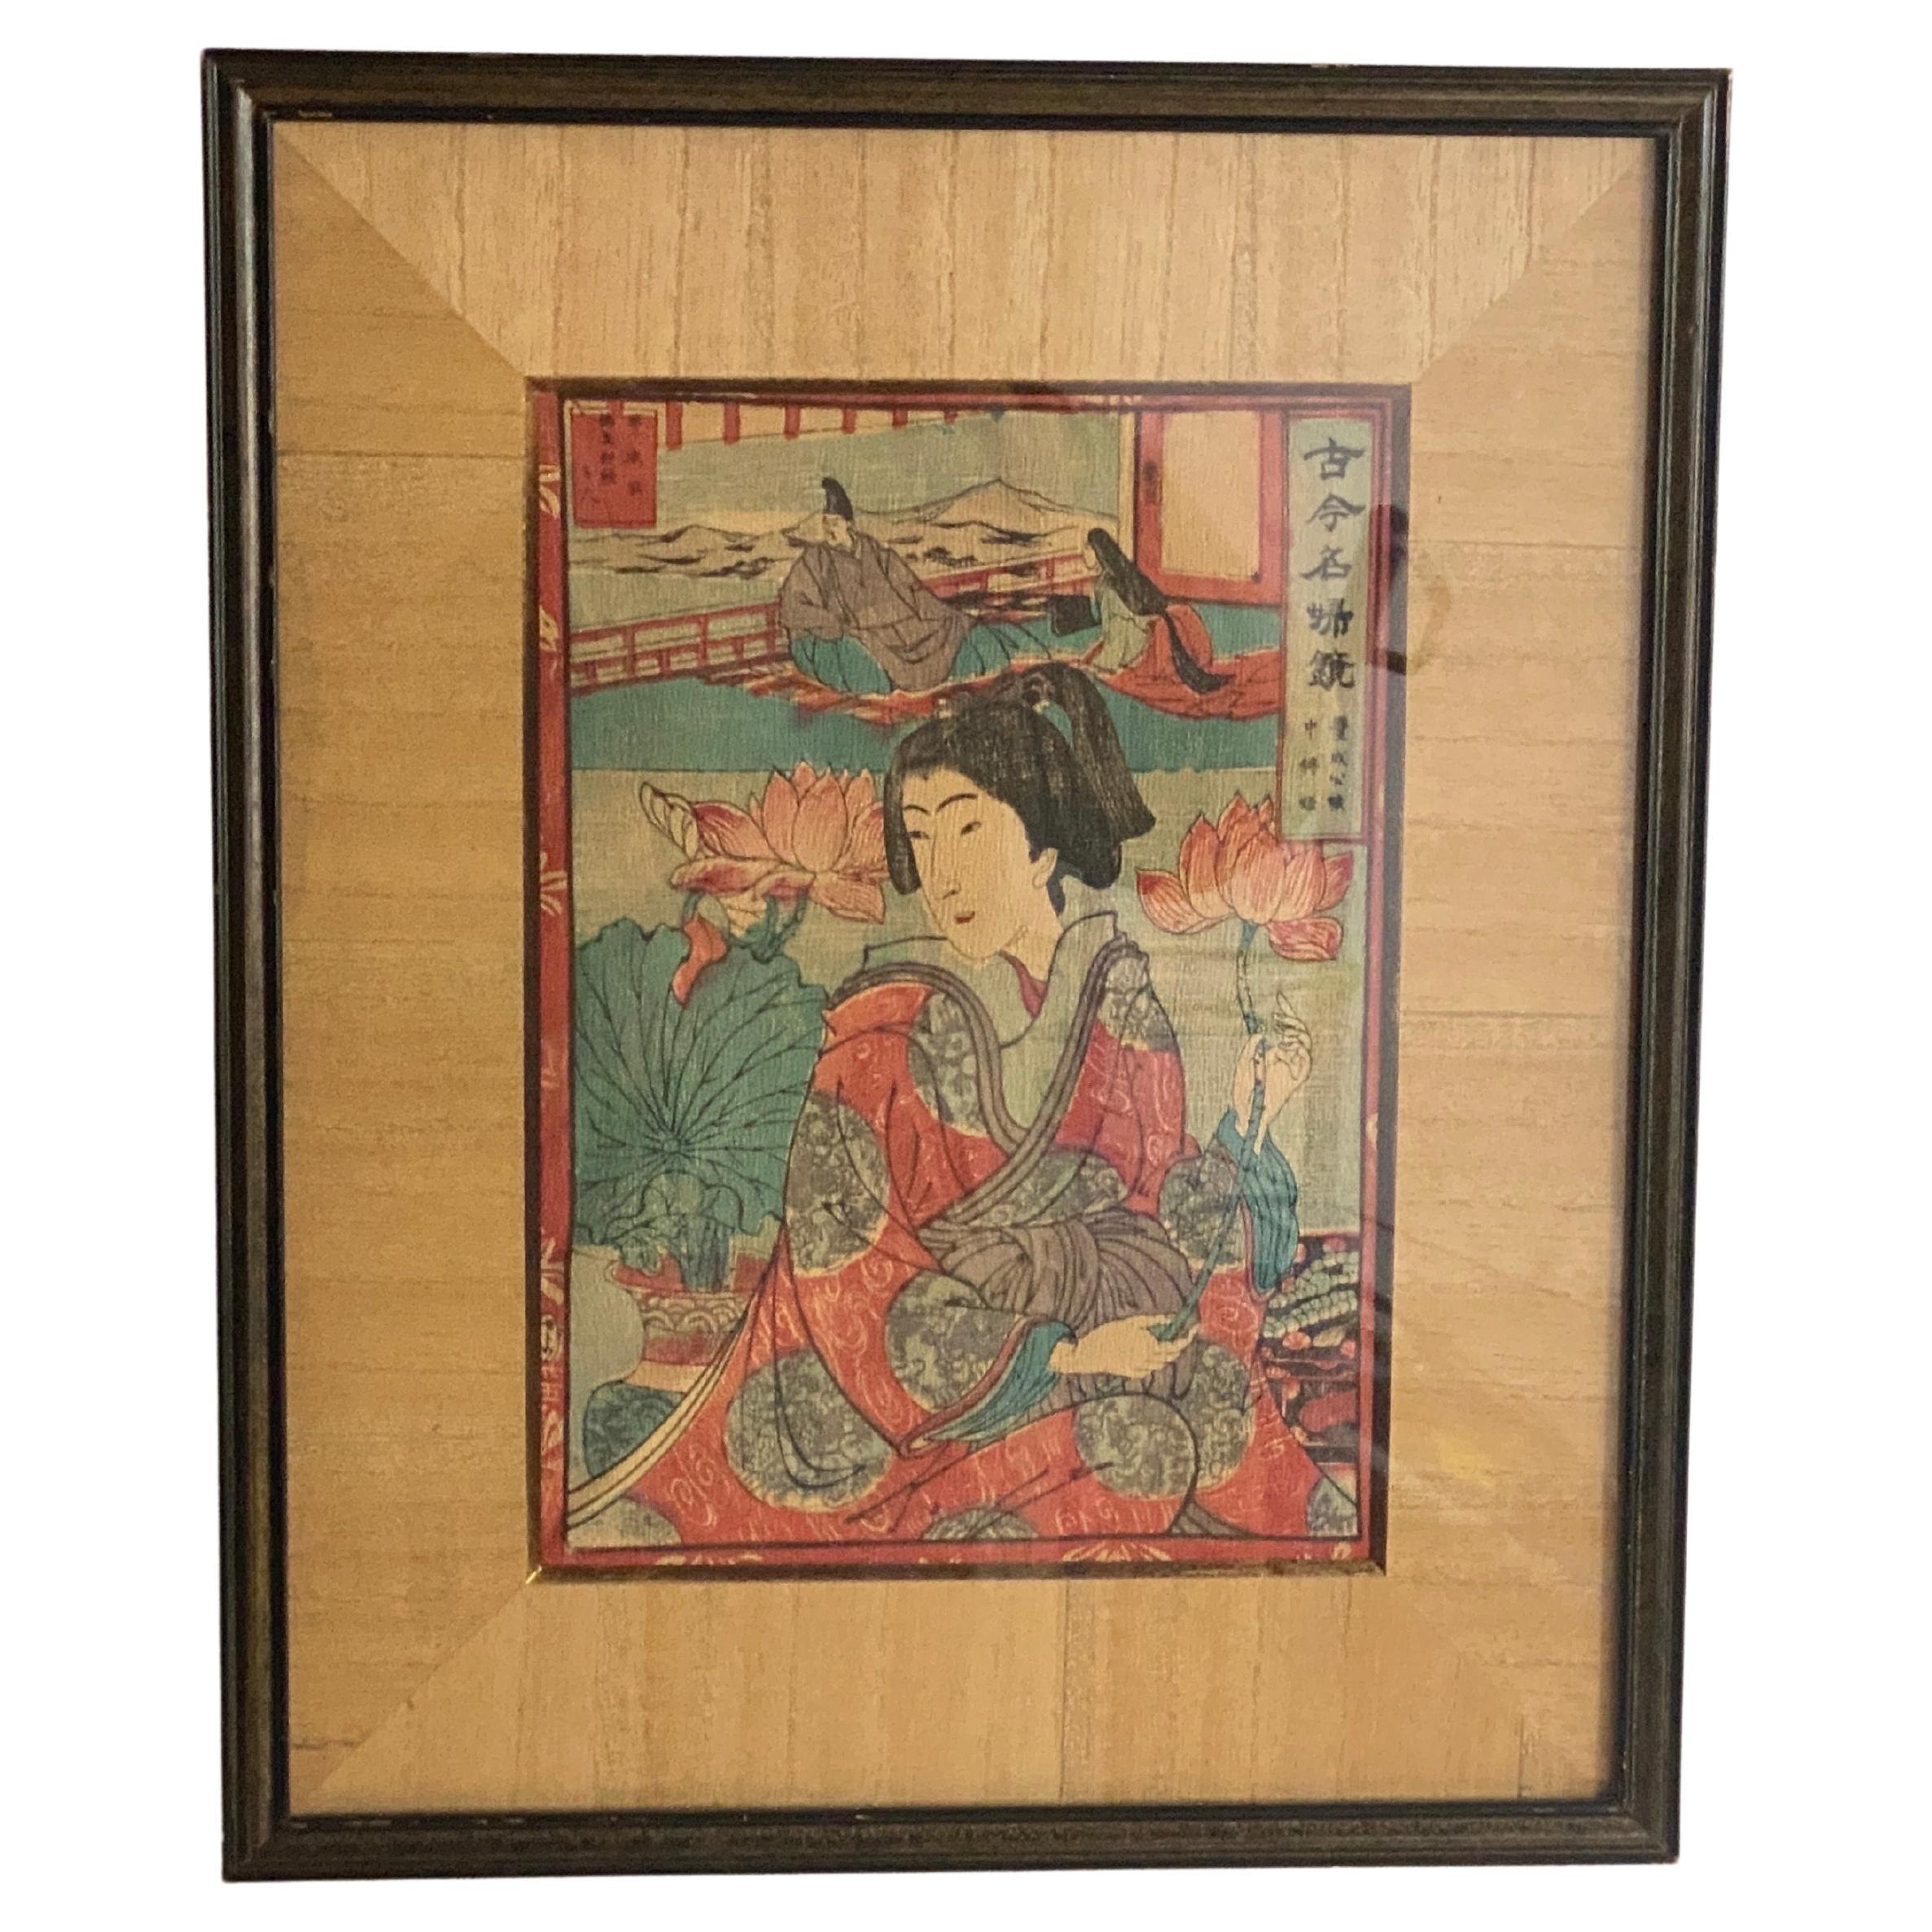 Original Japanese Woodblock Print by Japanese Artist 19th Century